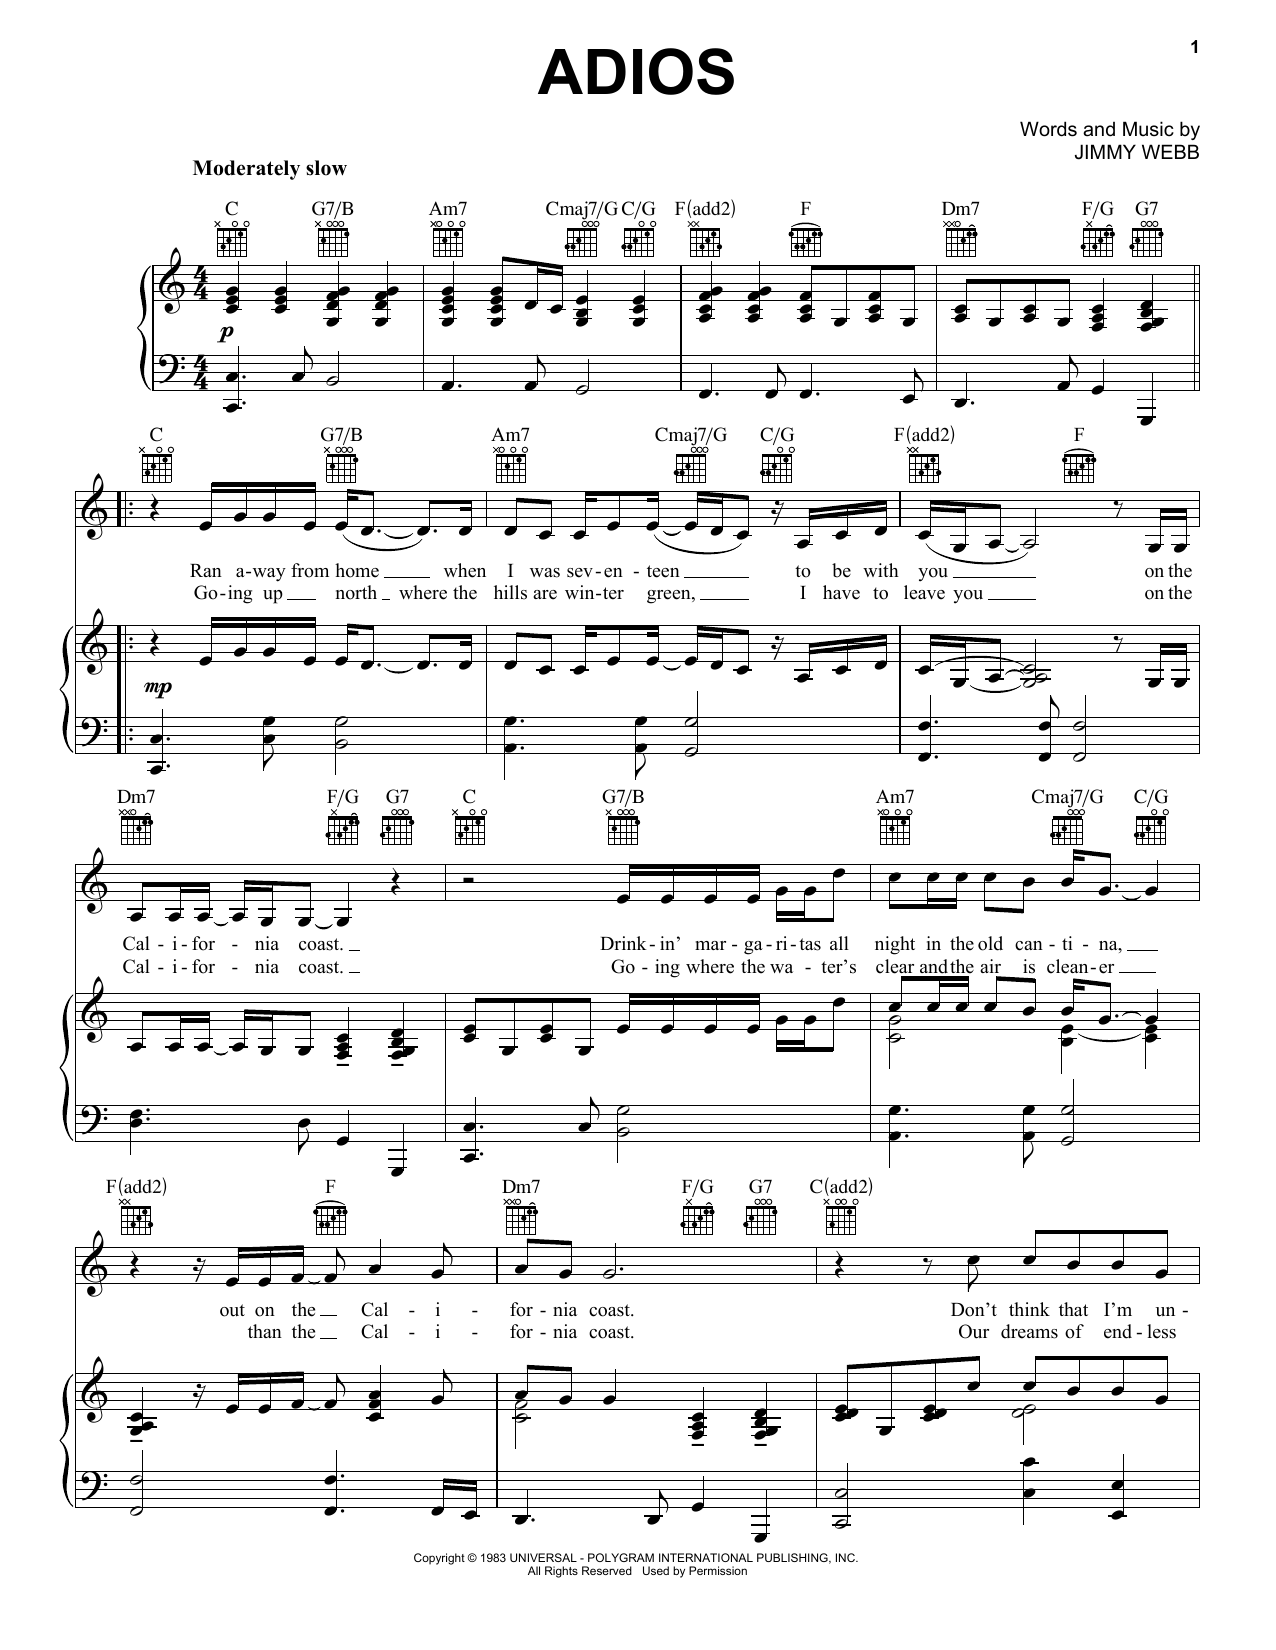 Jimmy Webb Adios sheet music notes and chords. Download Printable PDF.